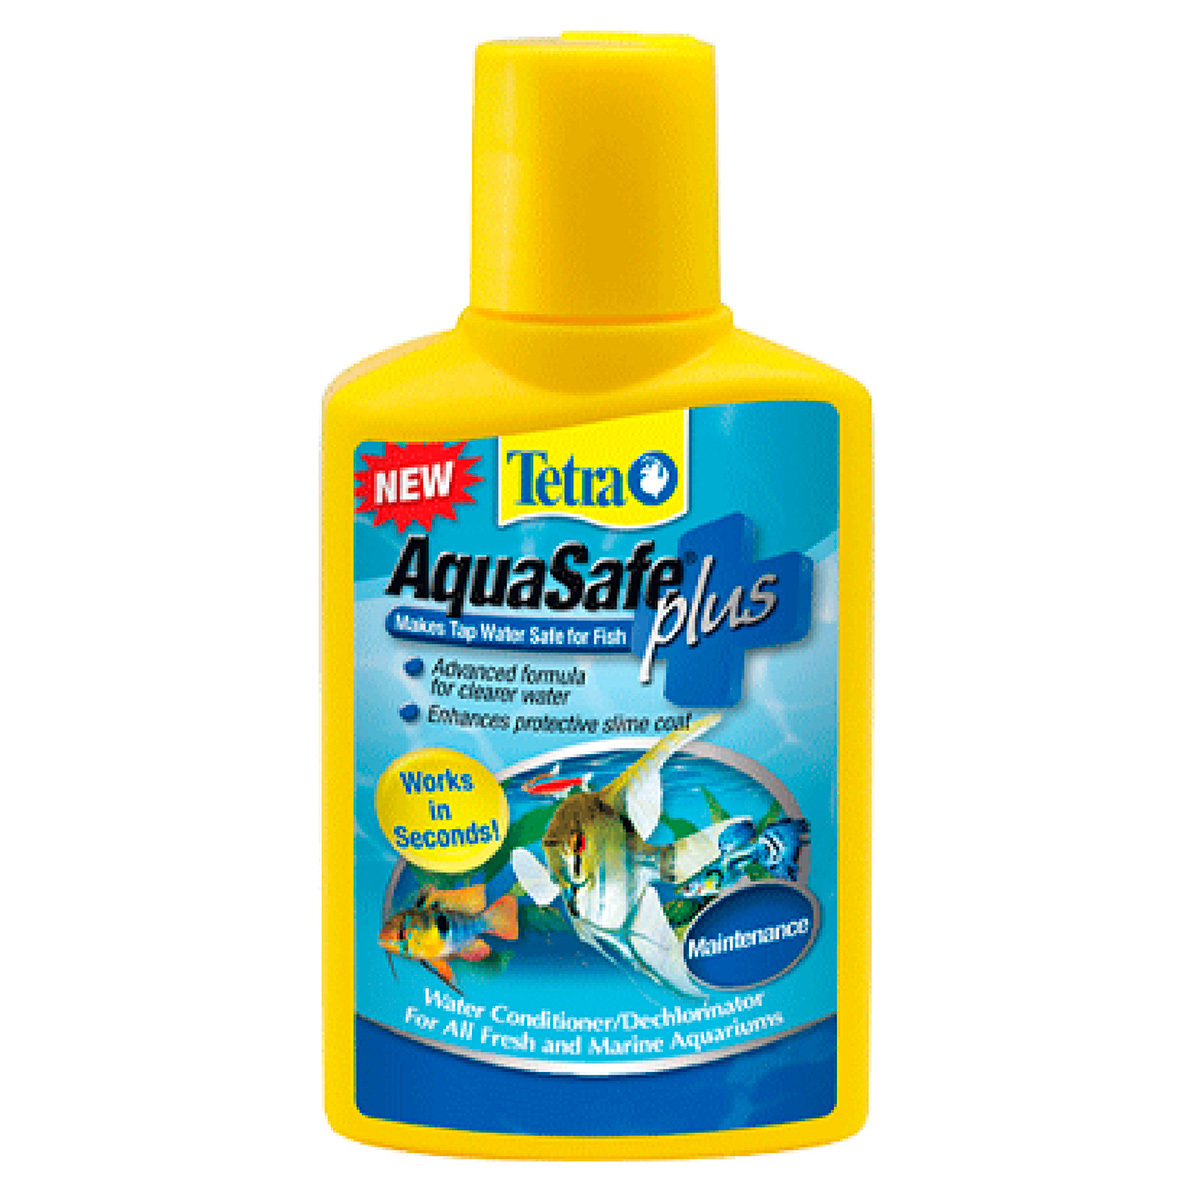 Tetra Aquasafe Plus Acondicionador para Acuario, 100 ml